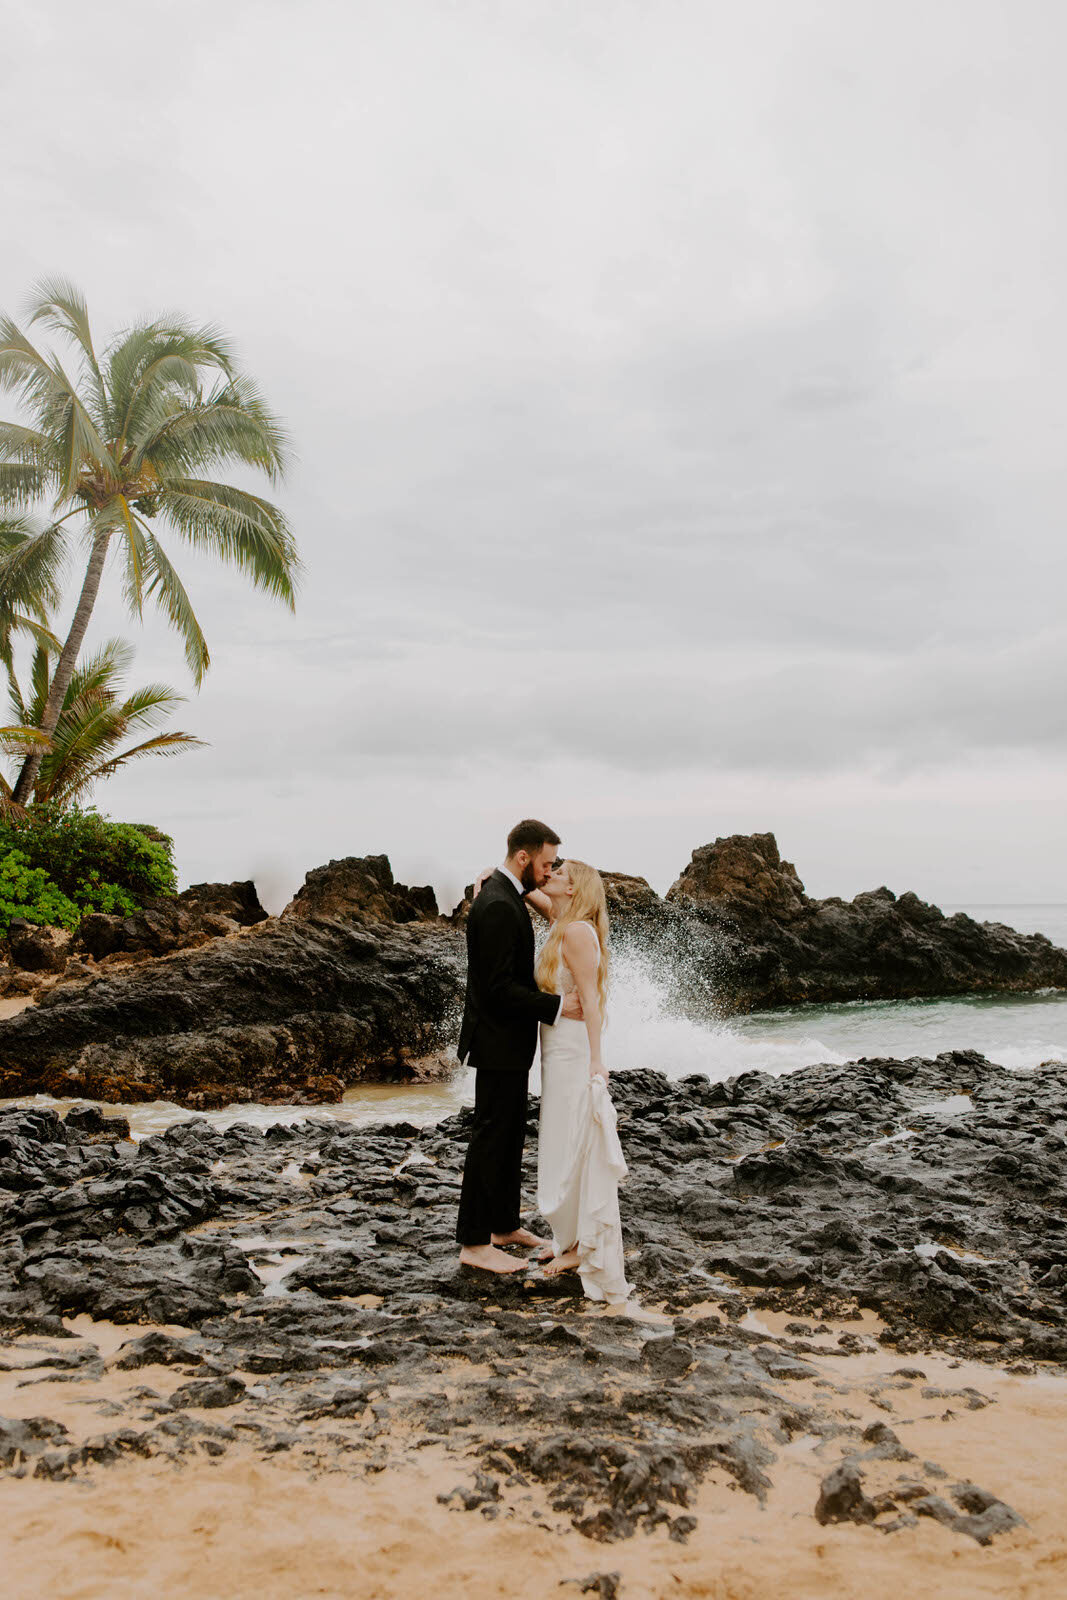 Brianna-Broyles-Photography-Fairmont-Kea-Lani-Wedding-Maui-Photographer-56.jpg